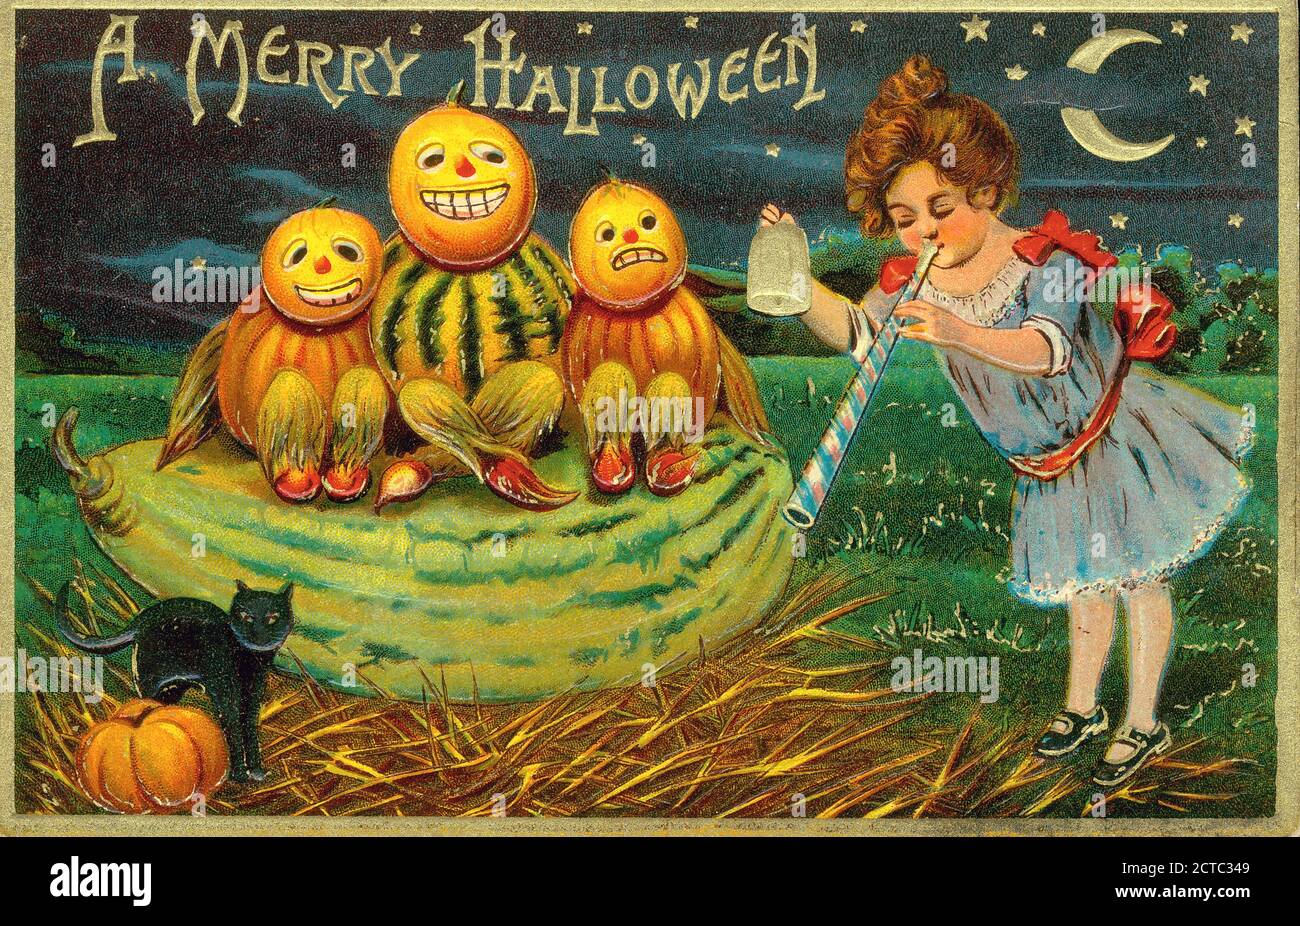 Vintage halloween greetings Stock Photo